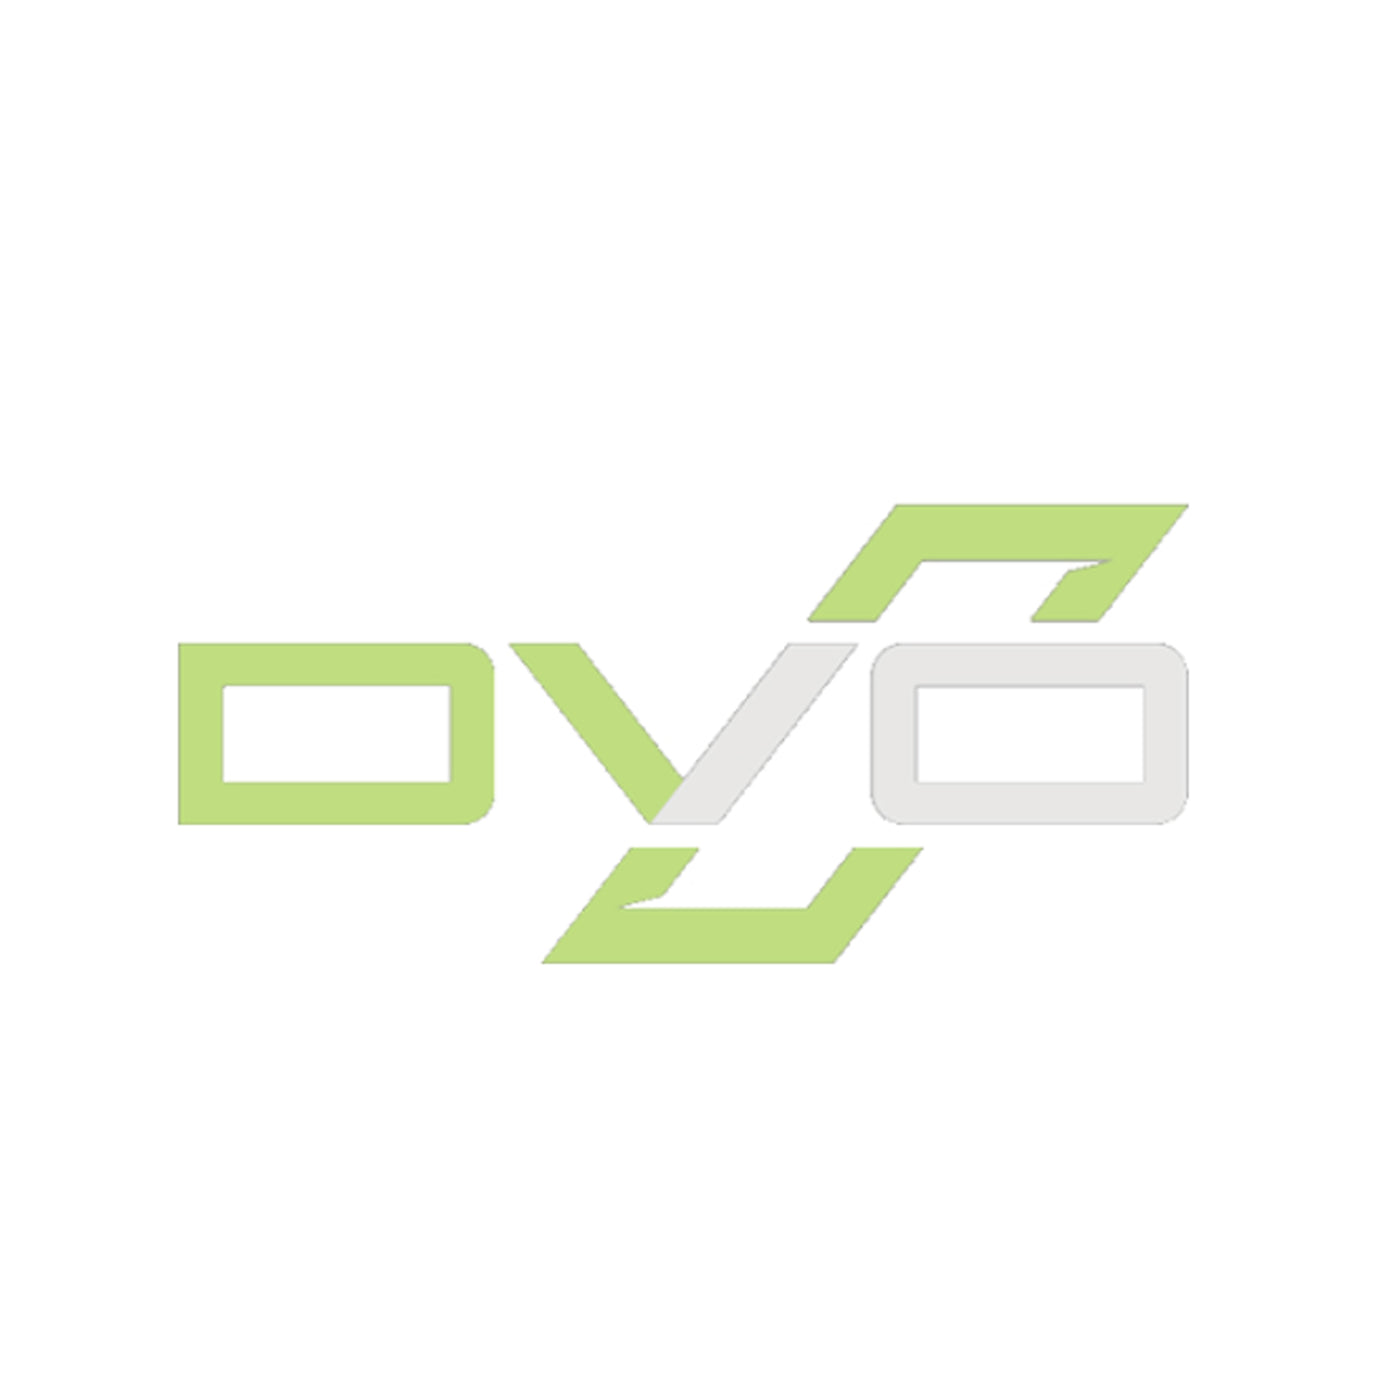 DVO Emerald factory parts